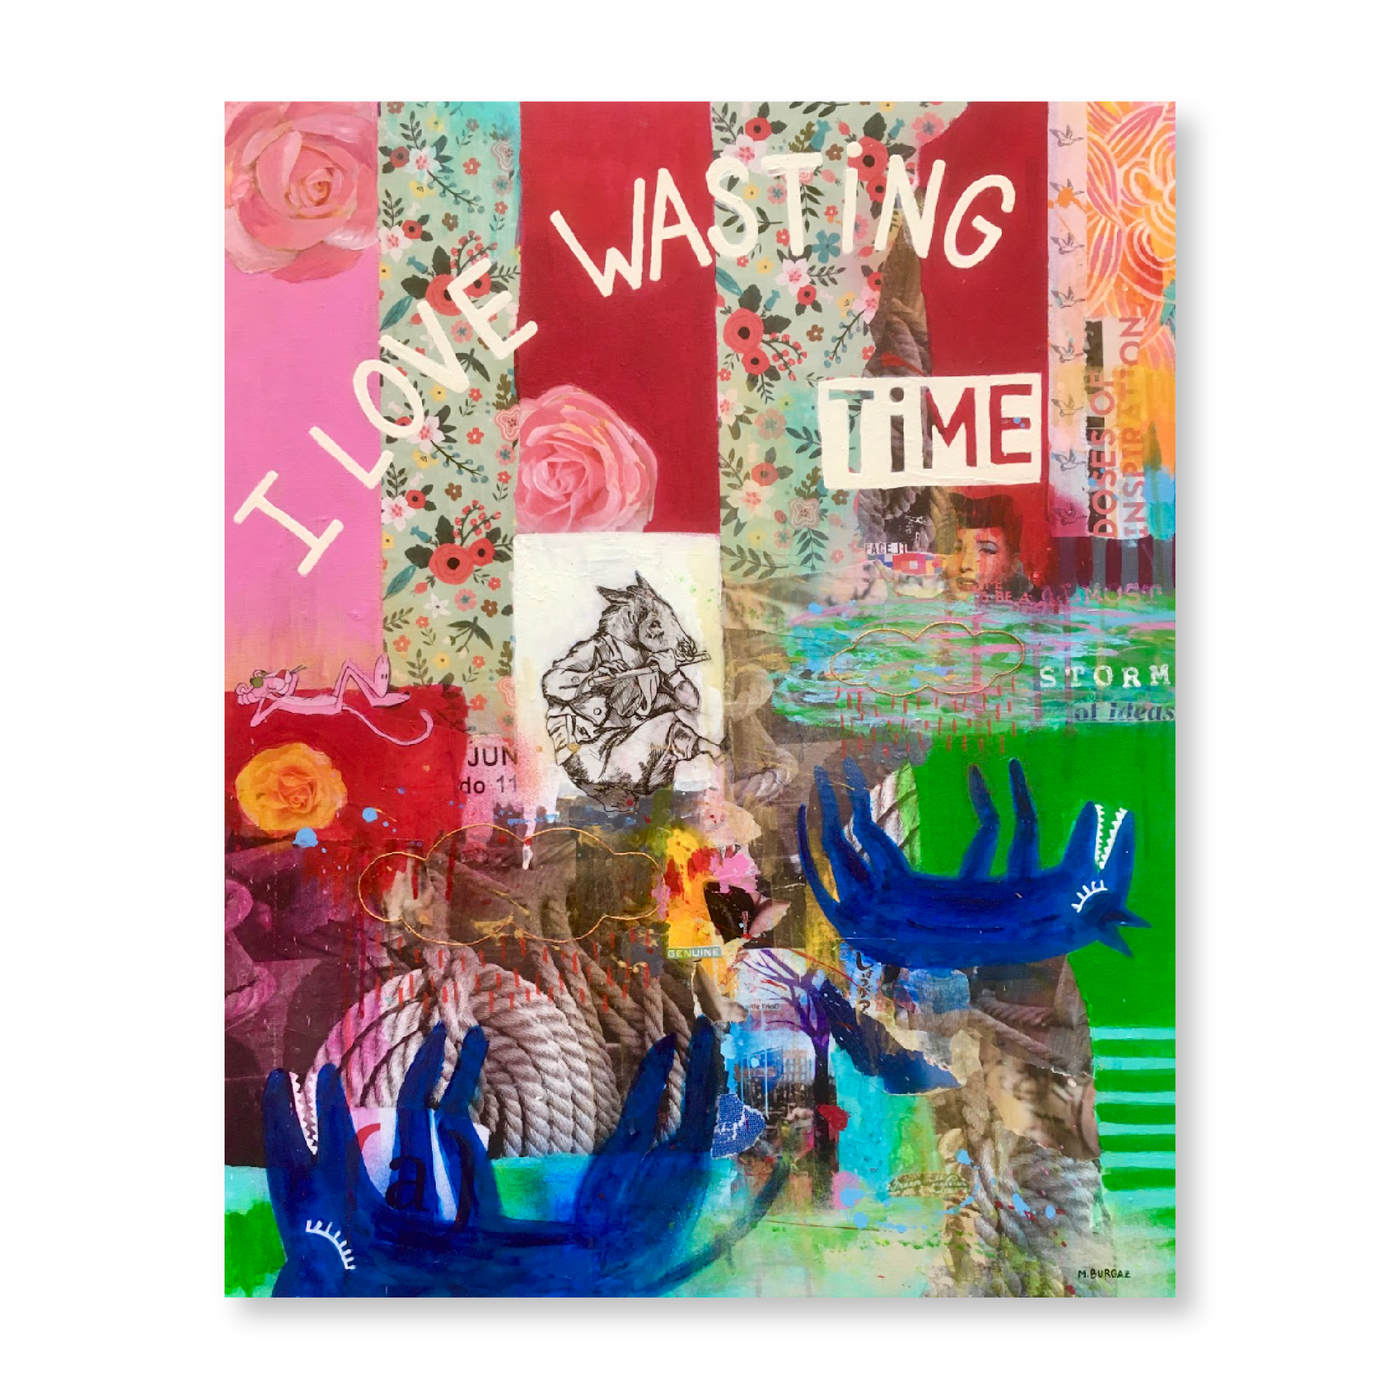 I Love Wasting Time | Original